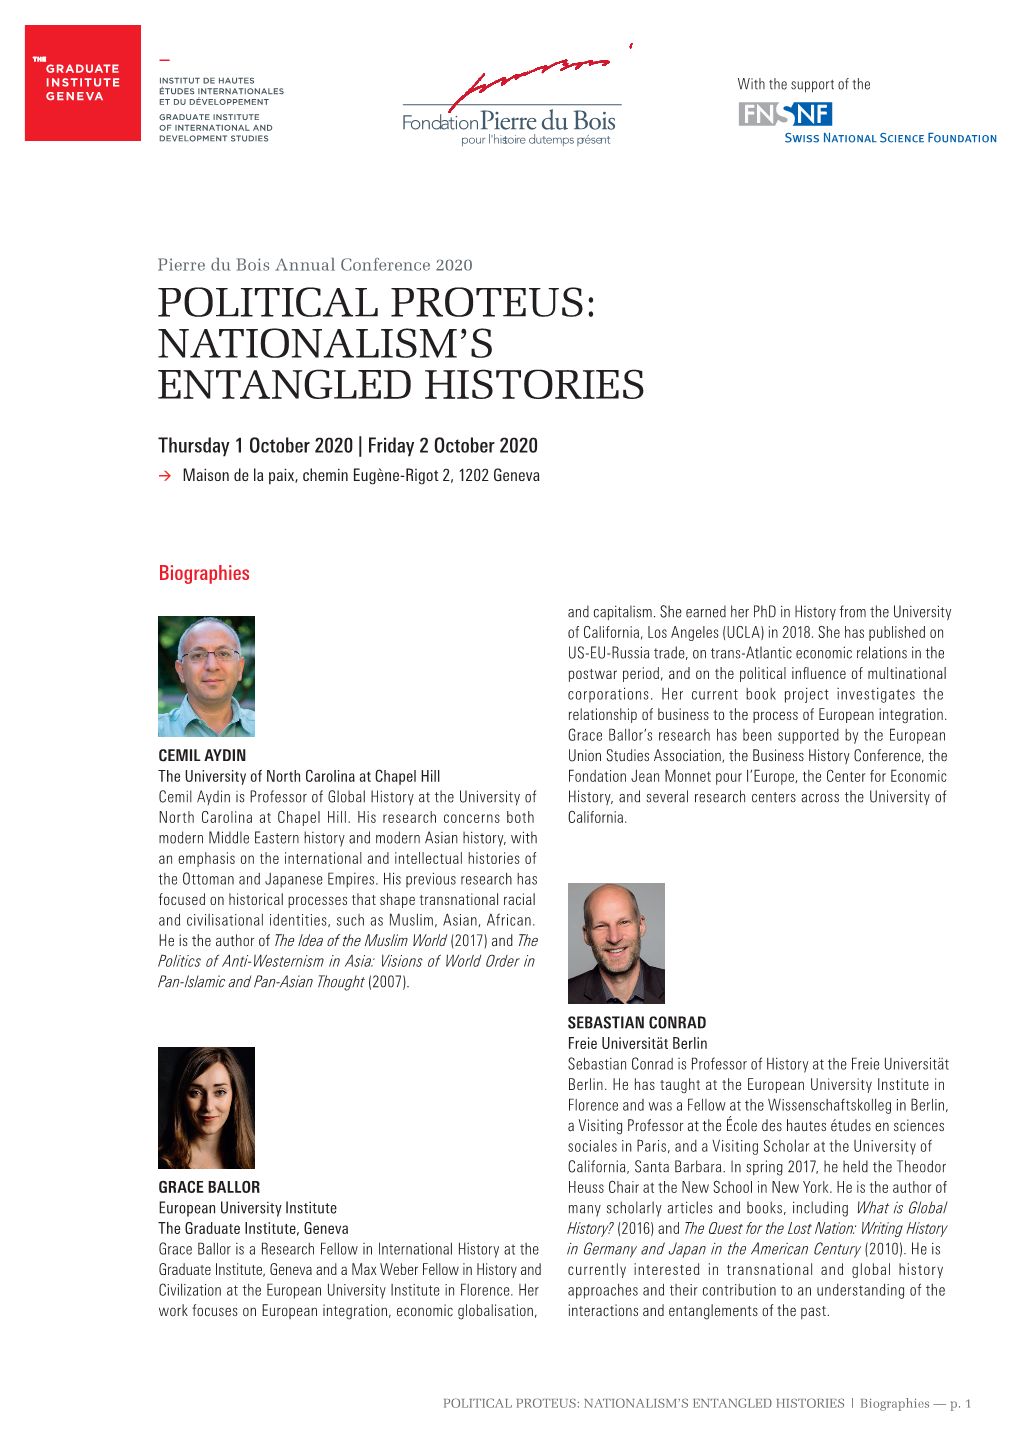 Nationalism's Entangled Histories